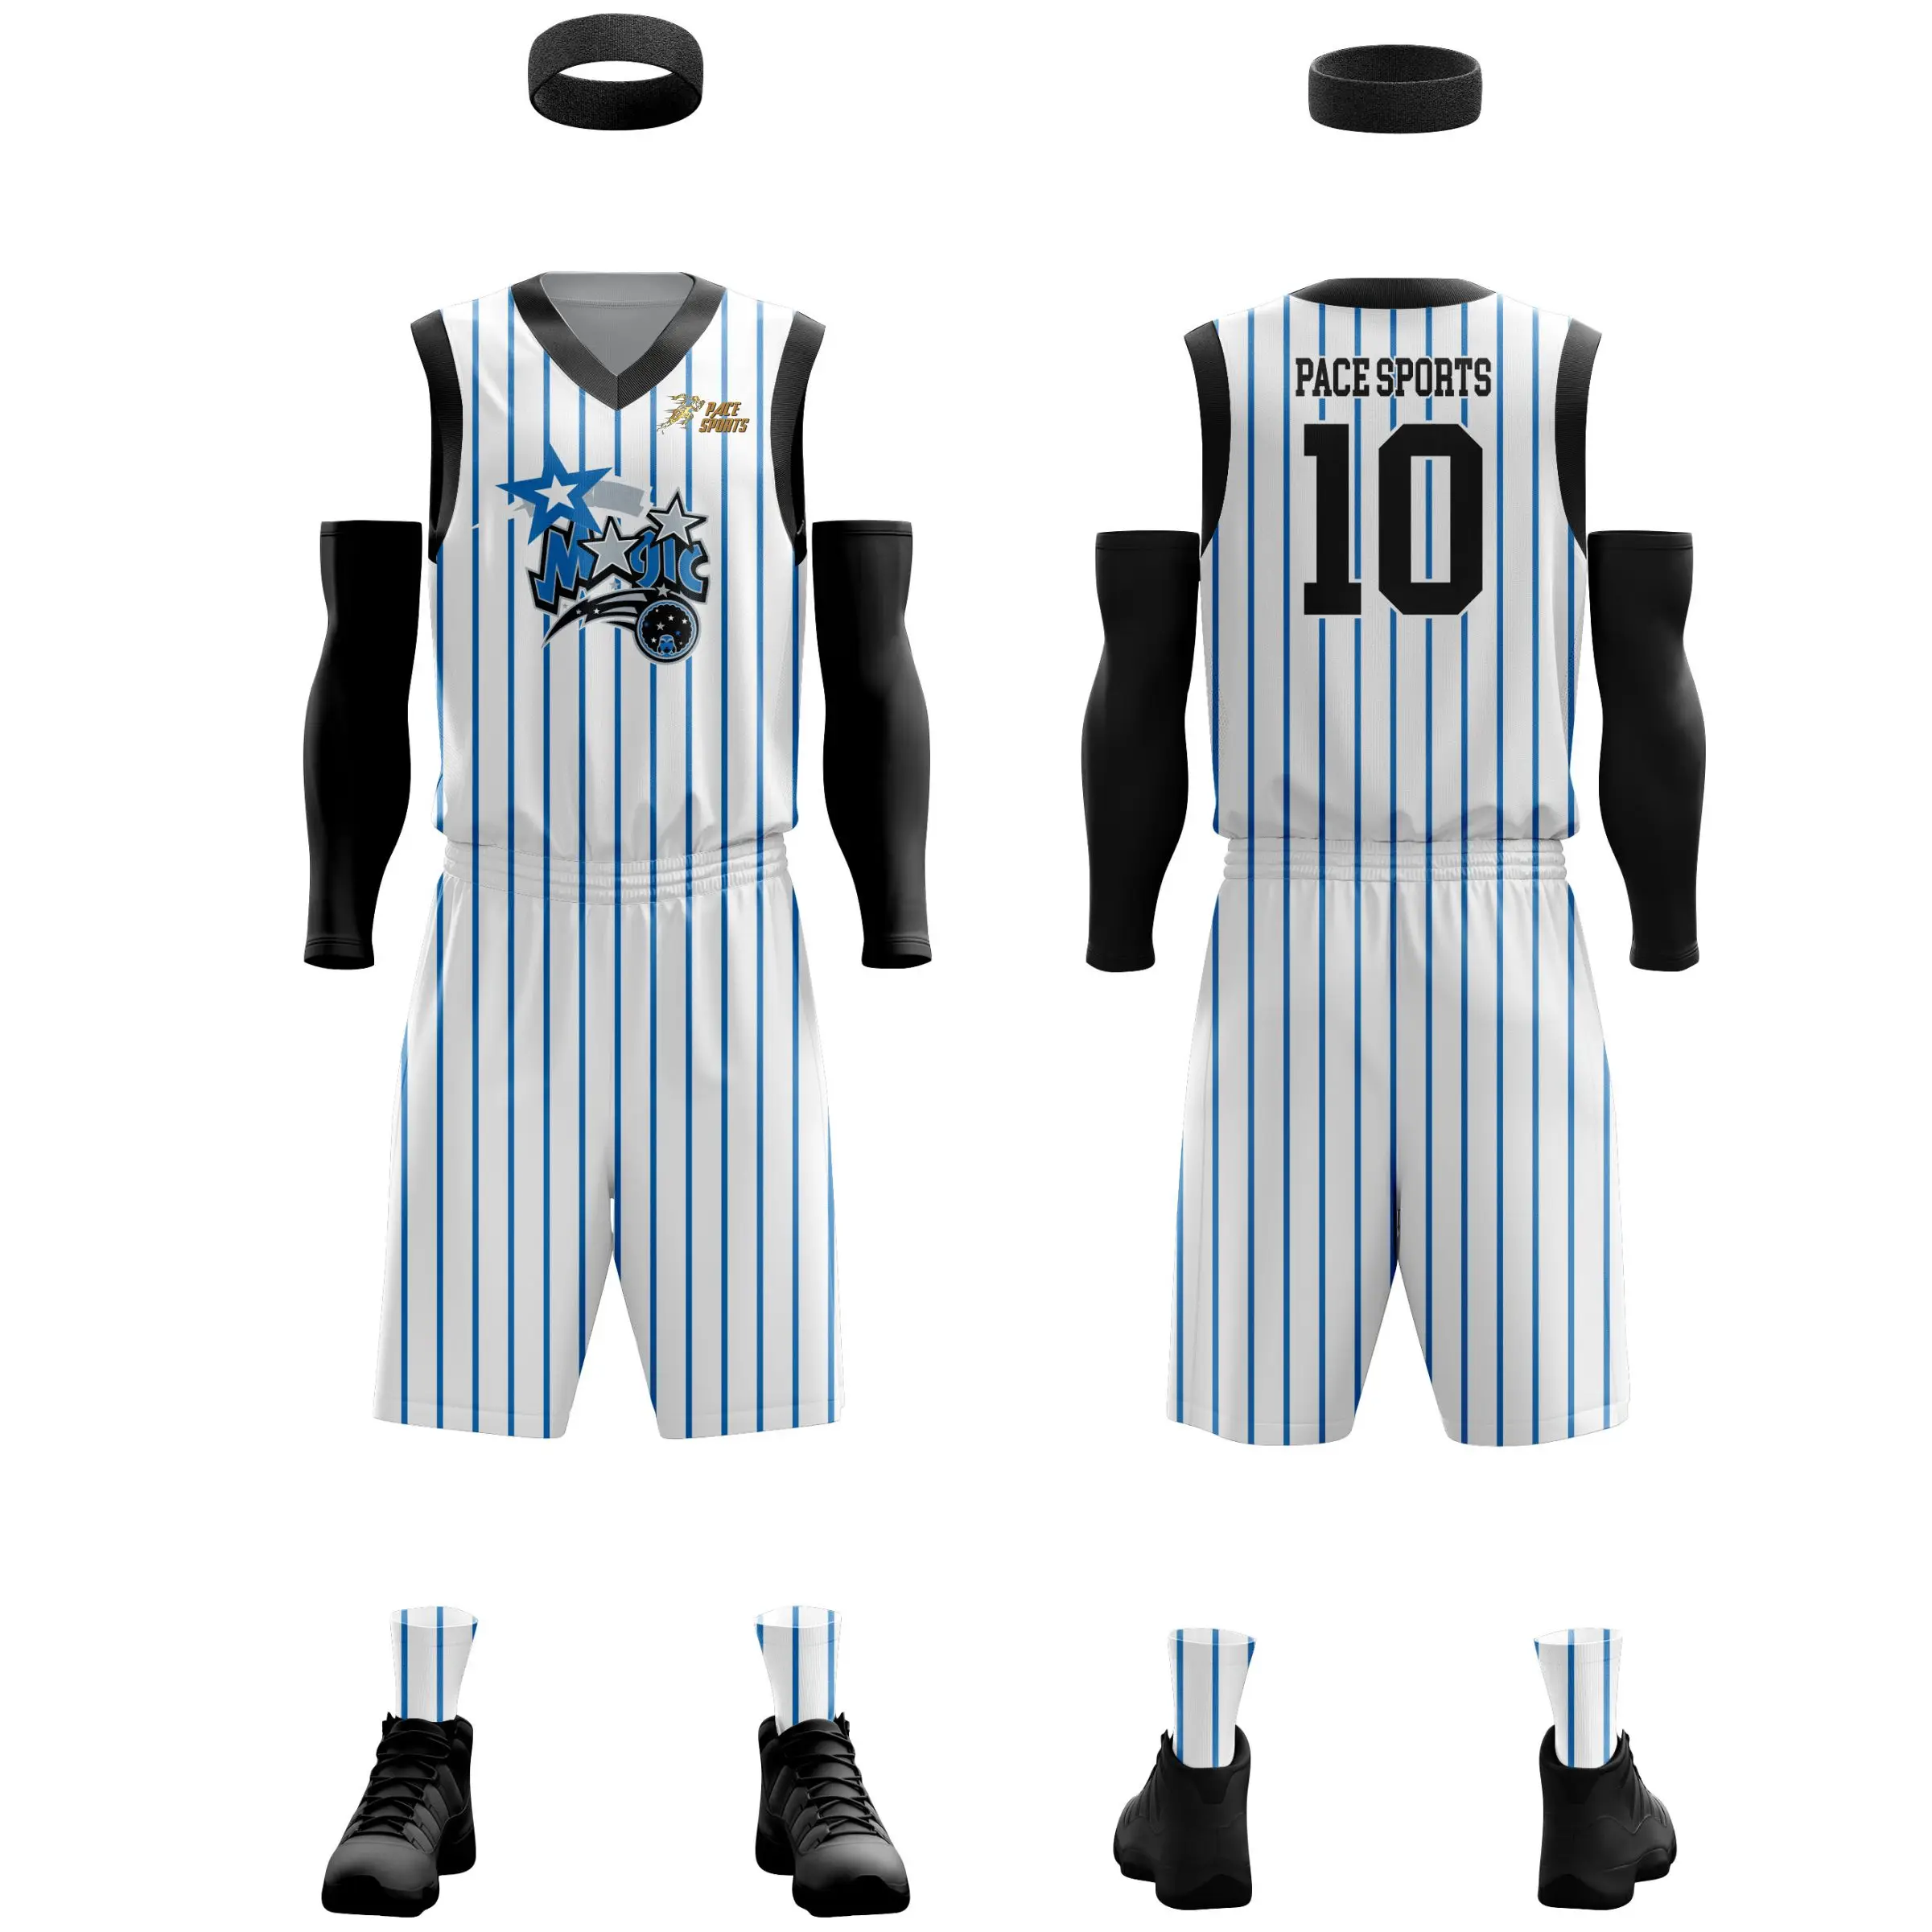 OEM Custom Design Breathable Mesh Basketball Uniform Youth Plain